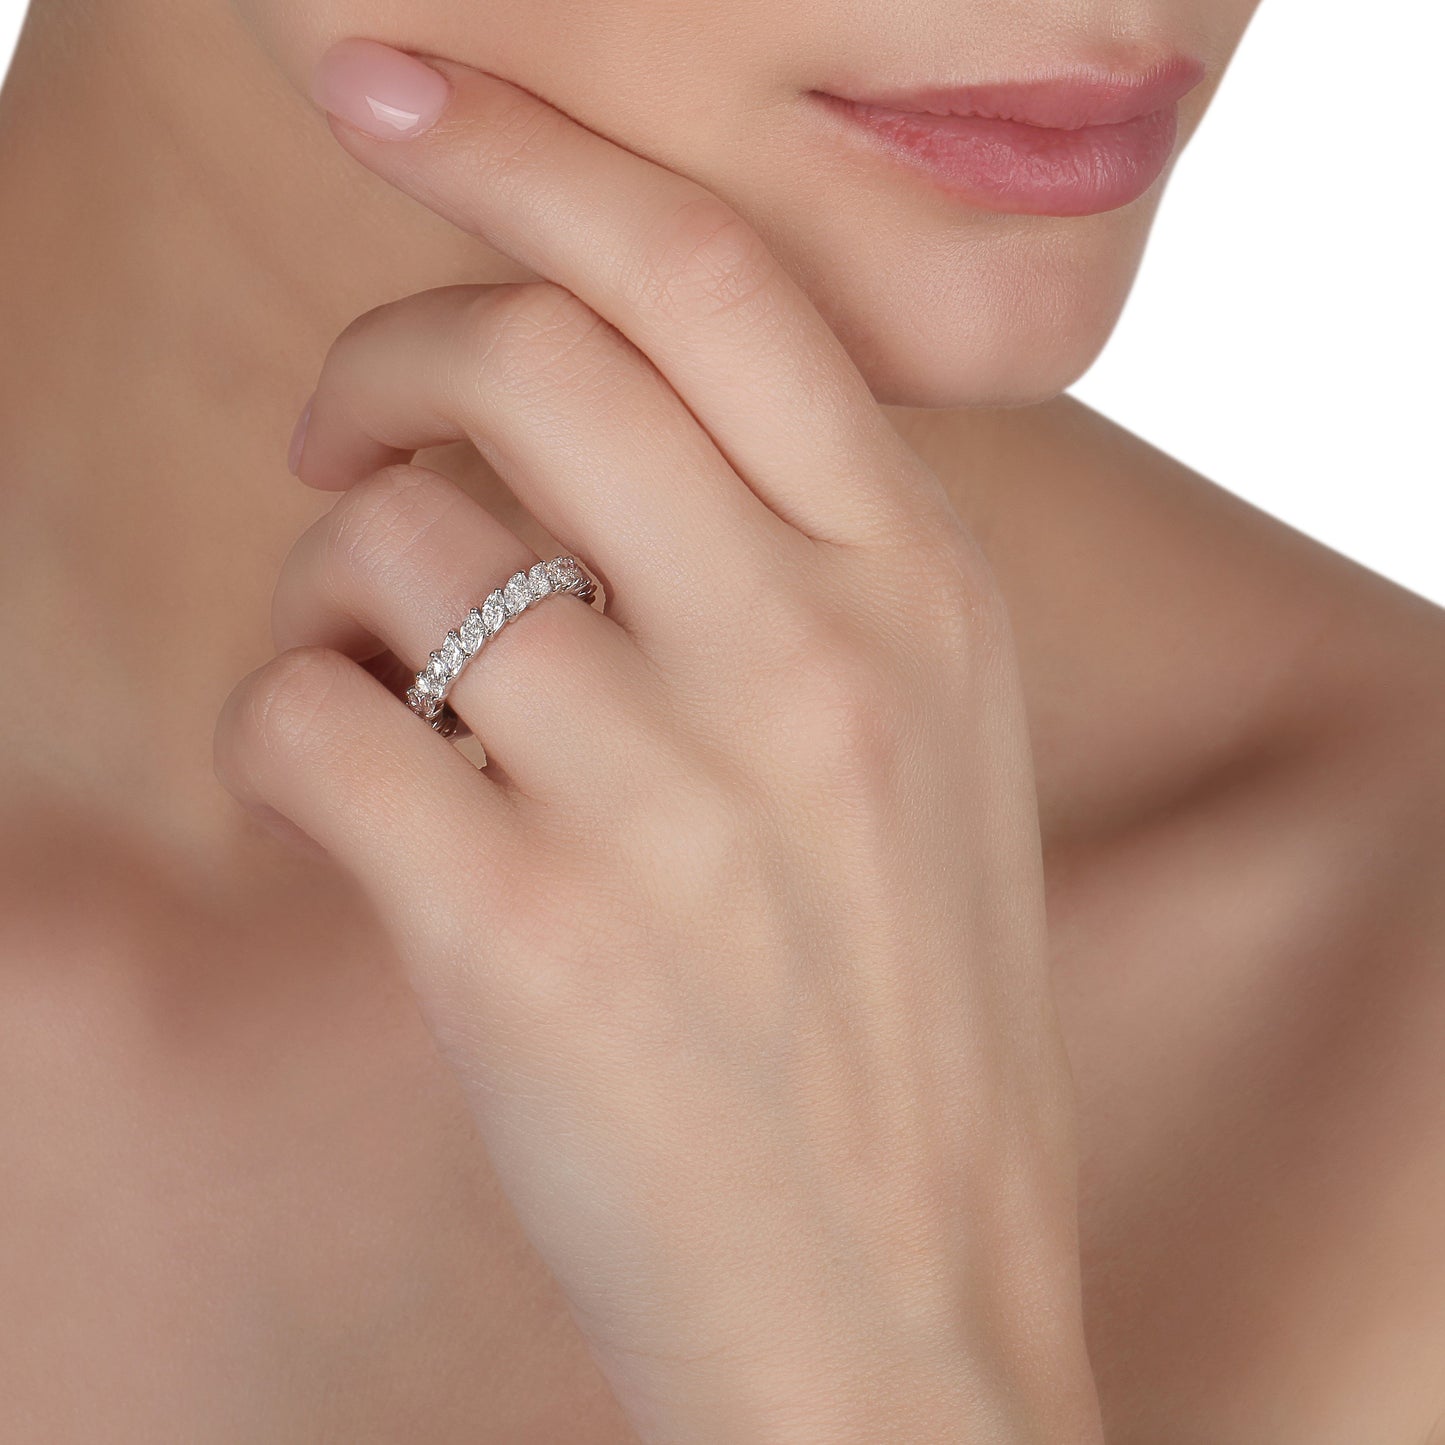 Marquise Diamond Eternity Band | jewellery store | diamond rings